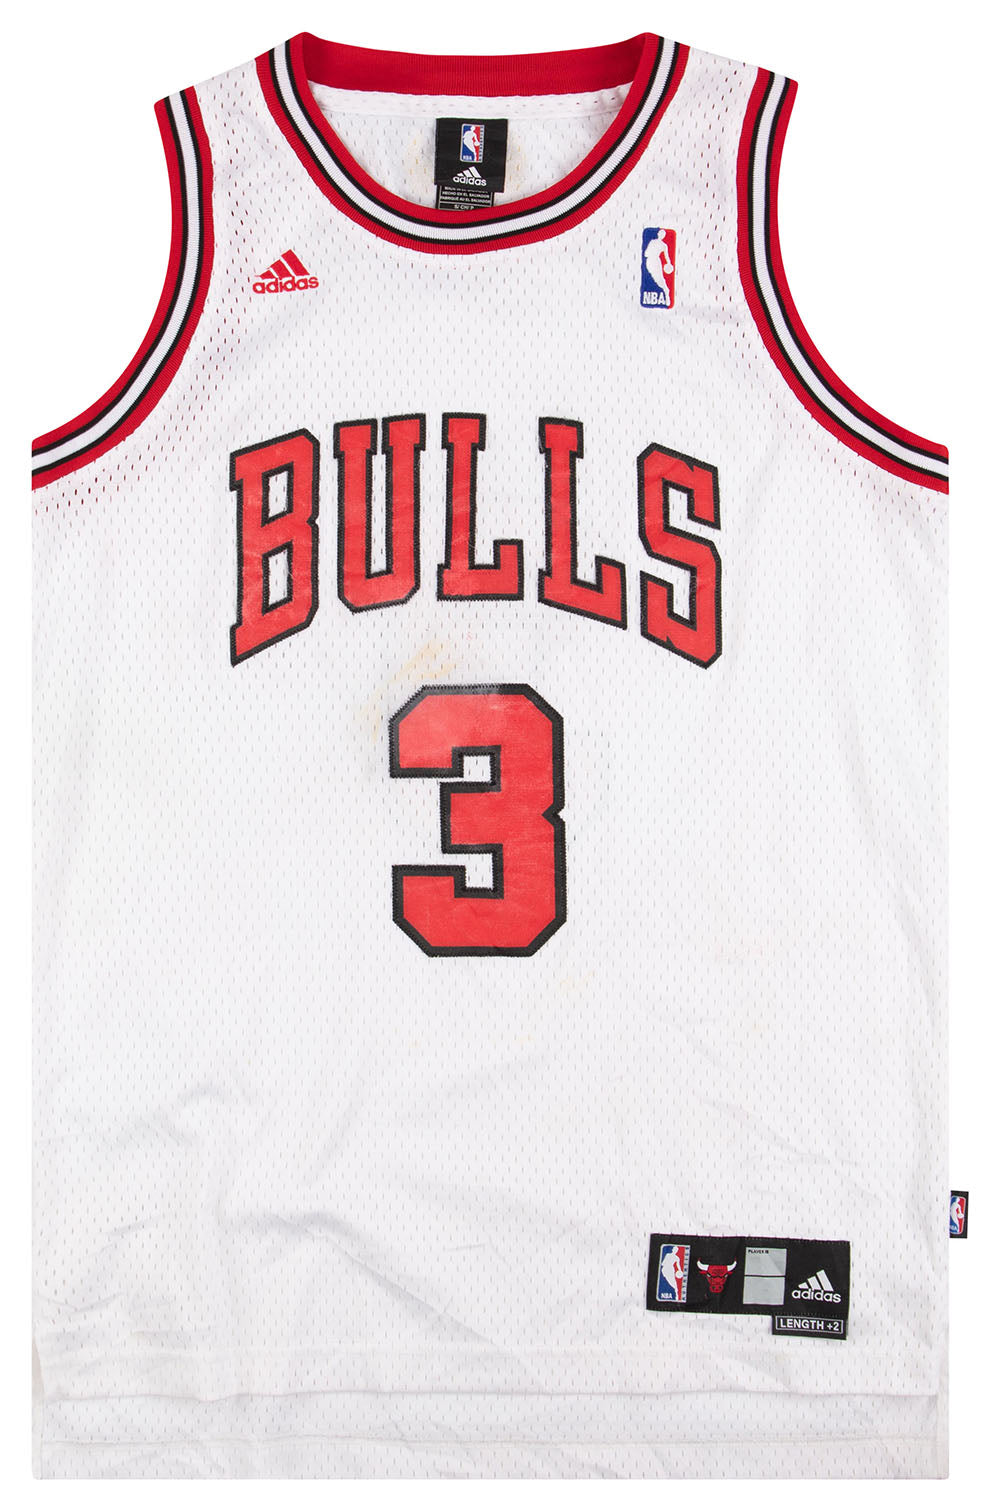 Chicago Bulls NBA *Wallace* Adidas Shirt M. Boys 10-12 Yrs